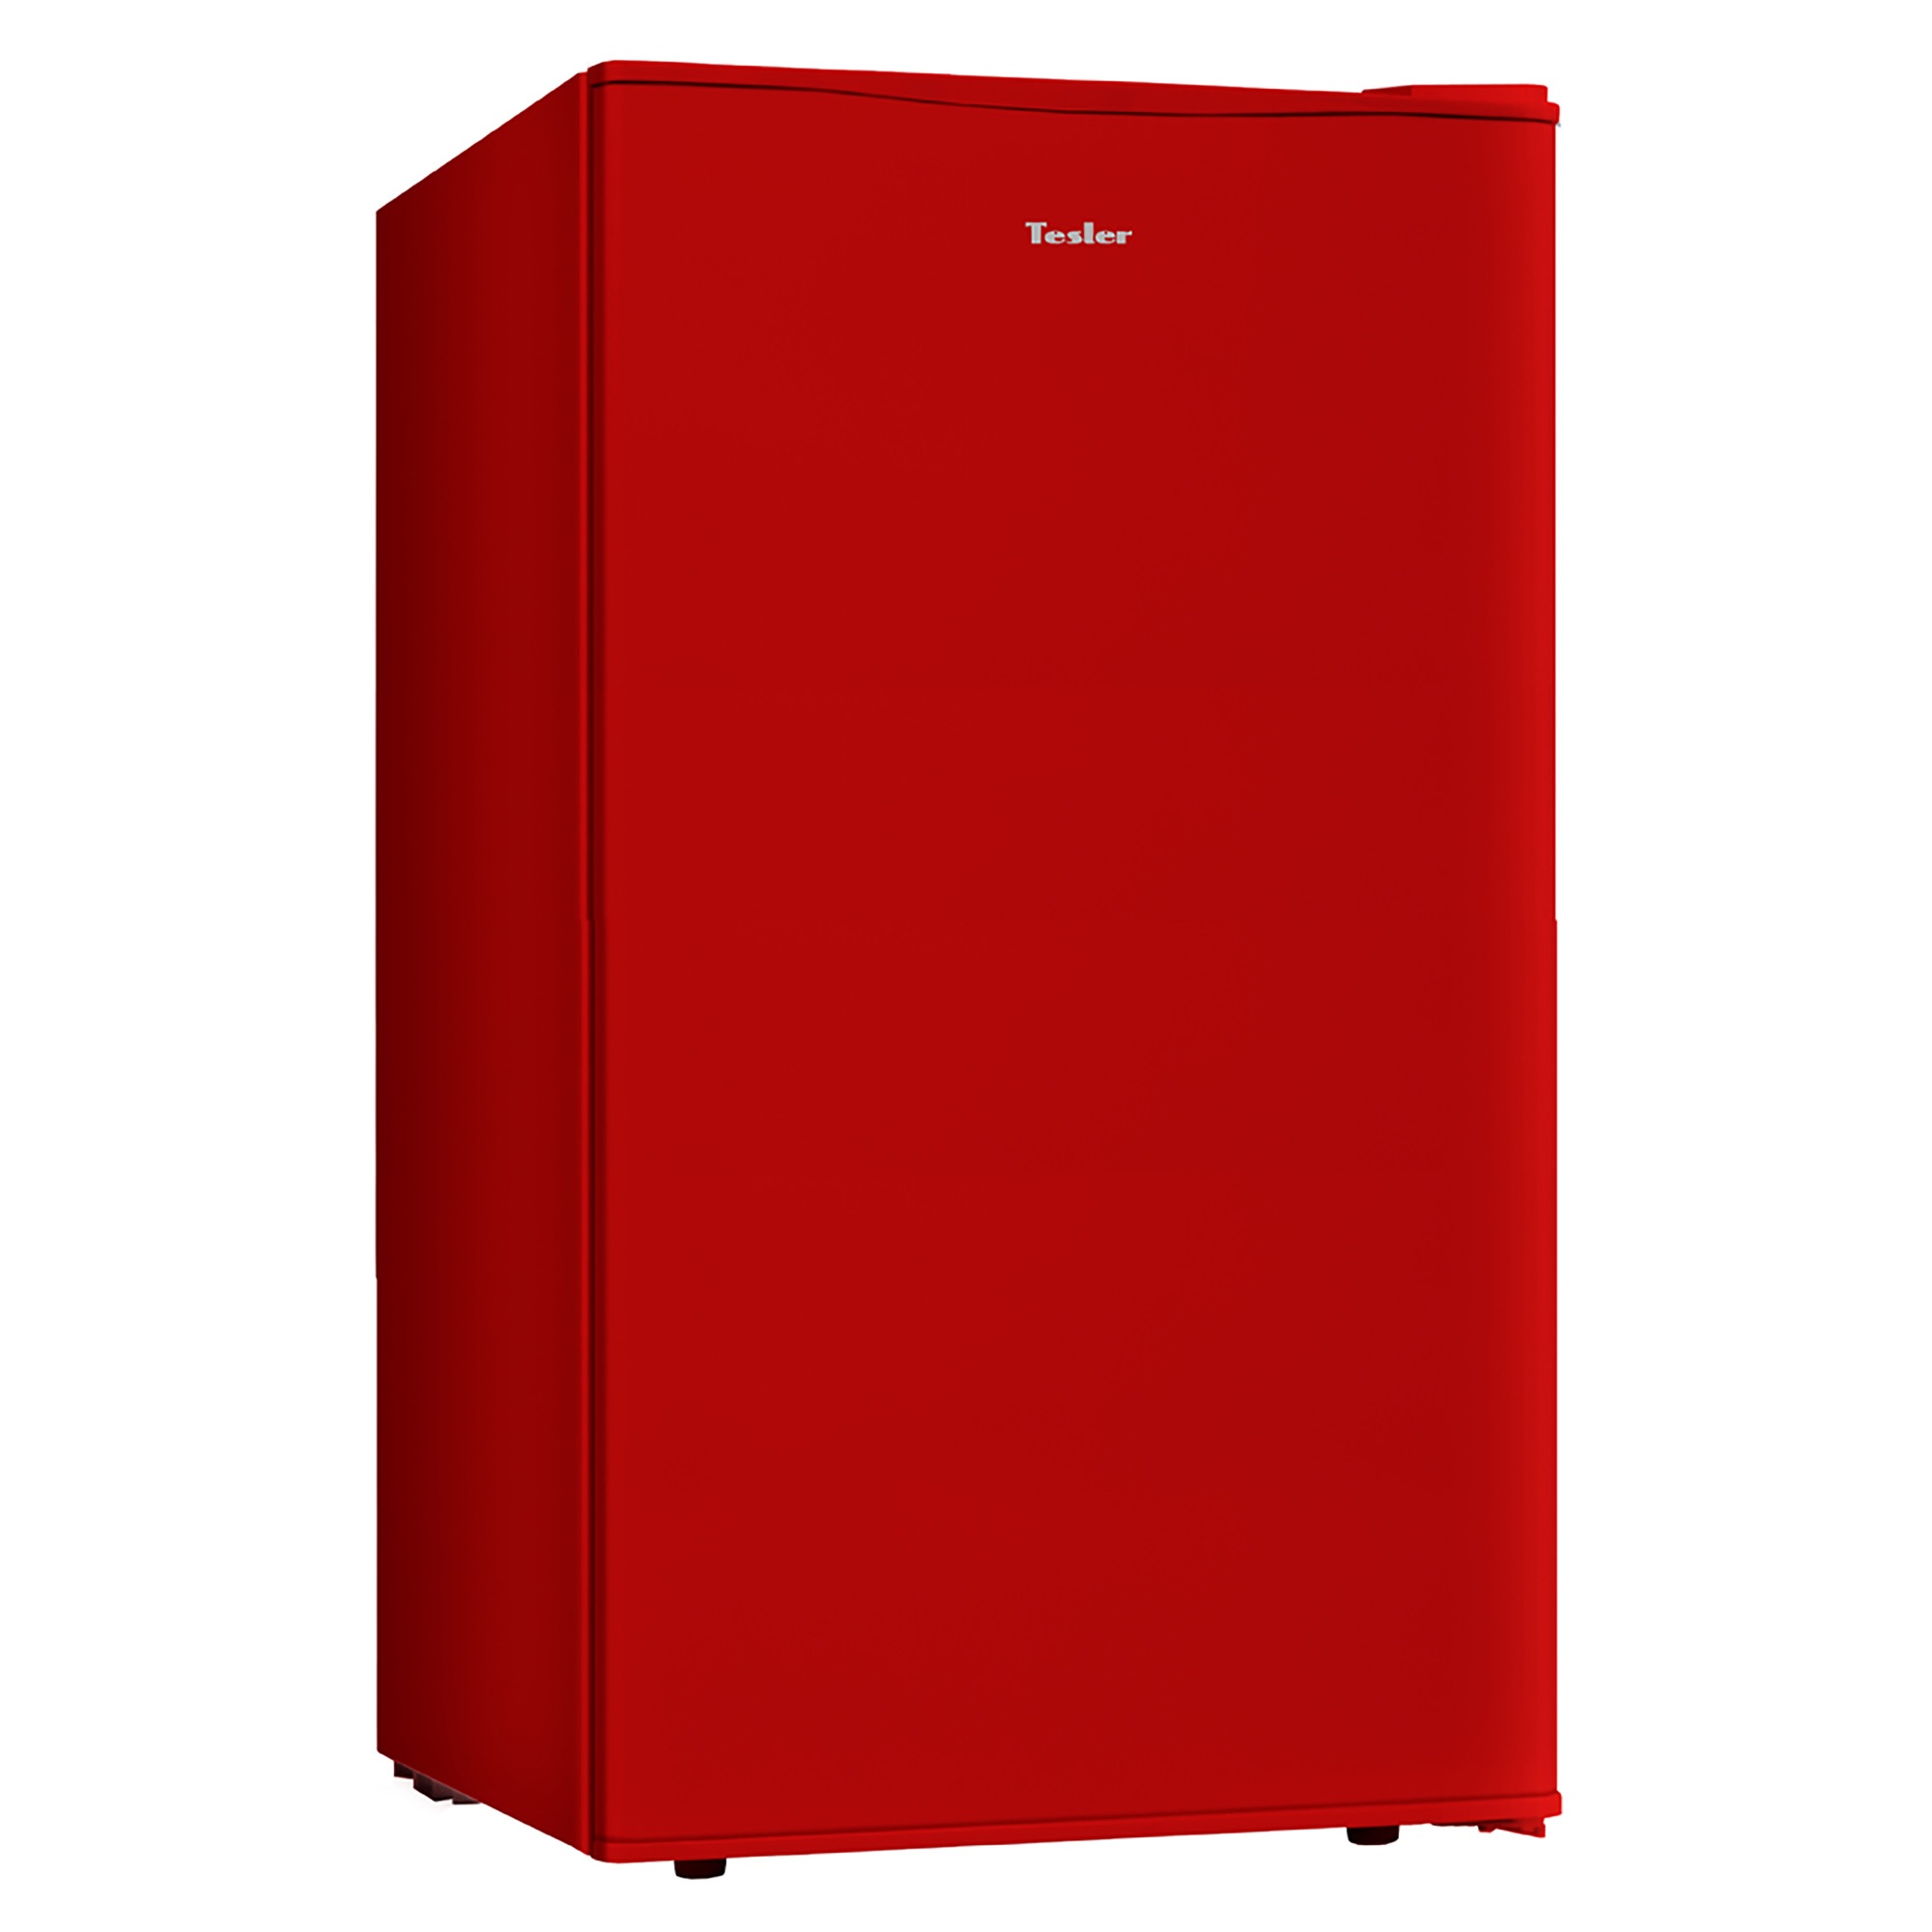 Холодильник TESLER RC-95 красный холодильник tesler rc 55 красный